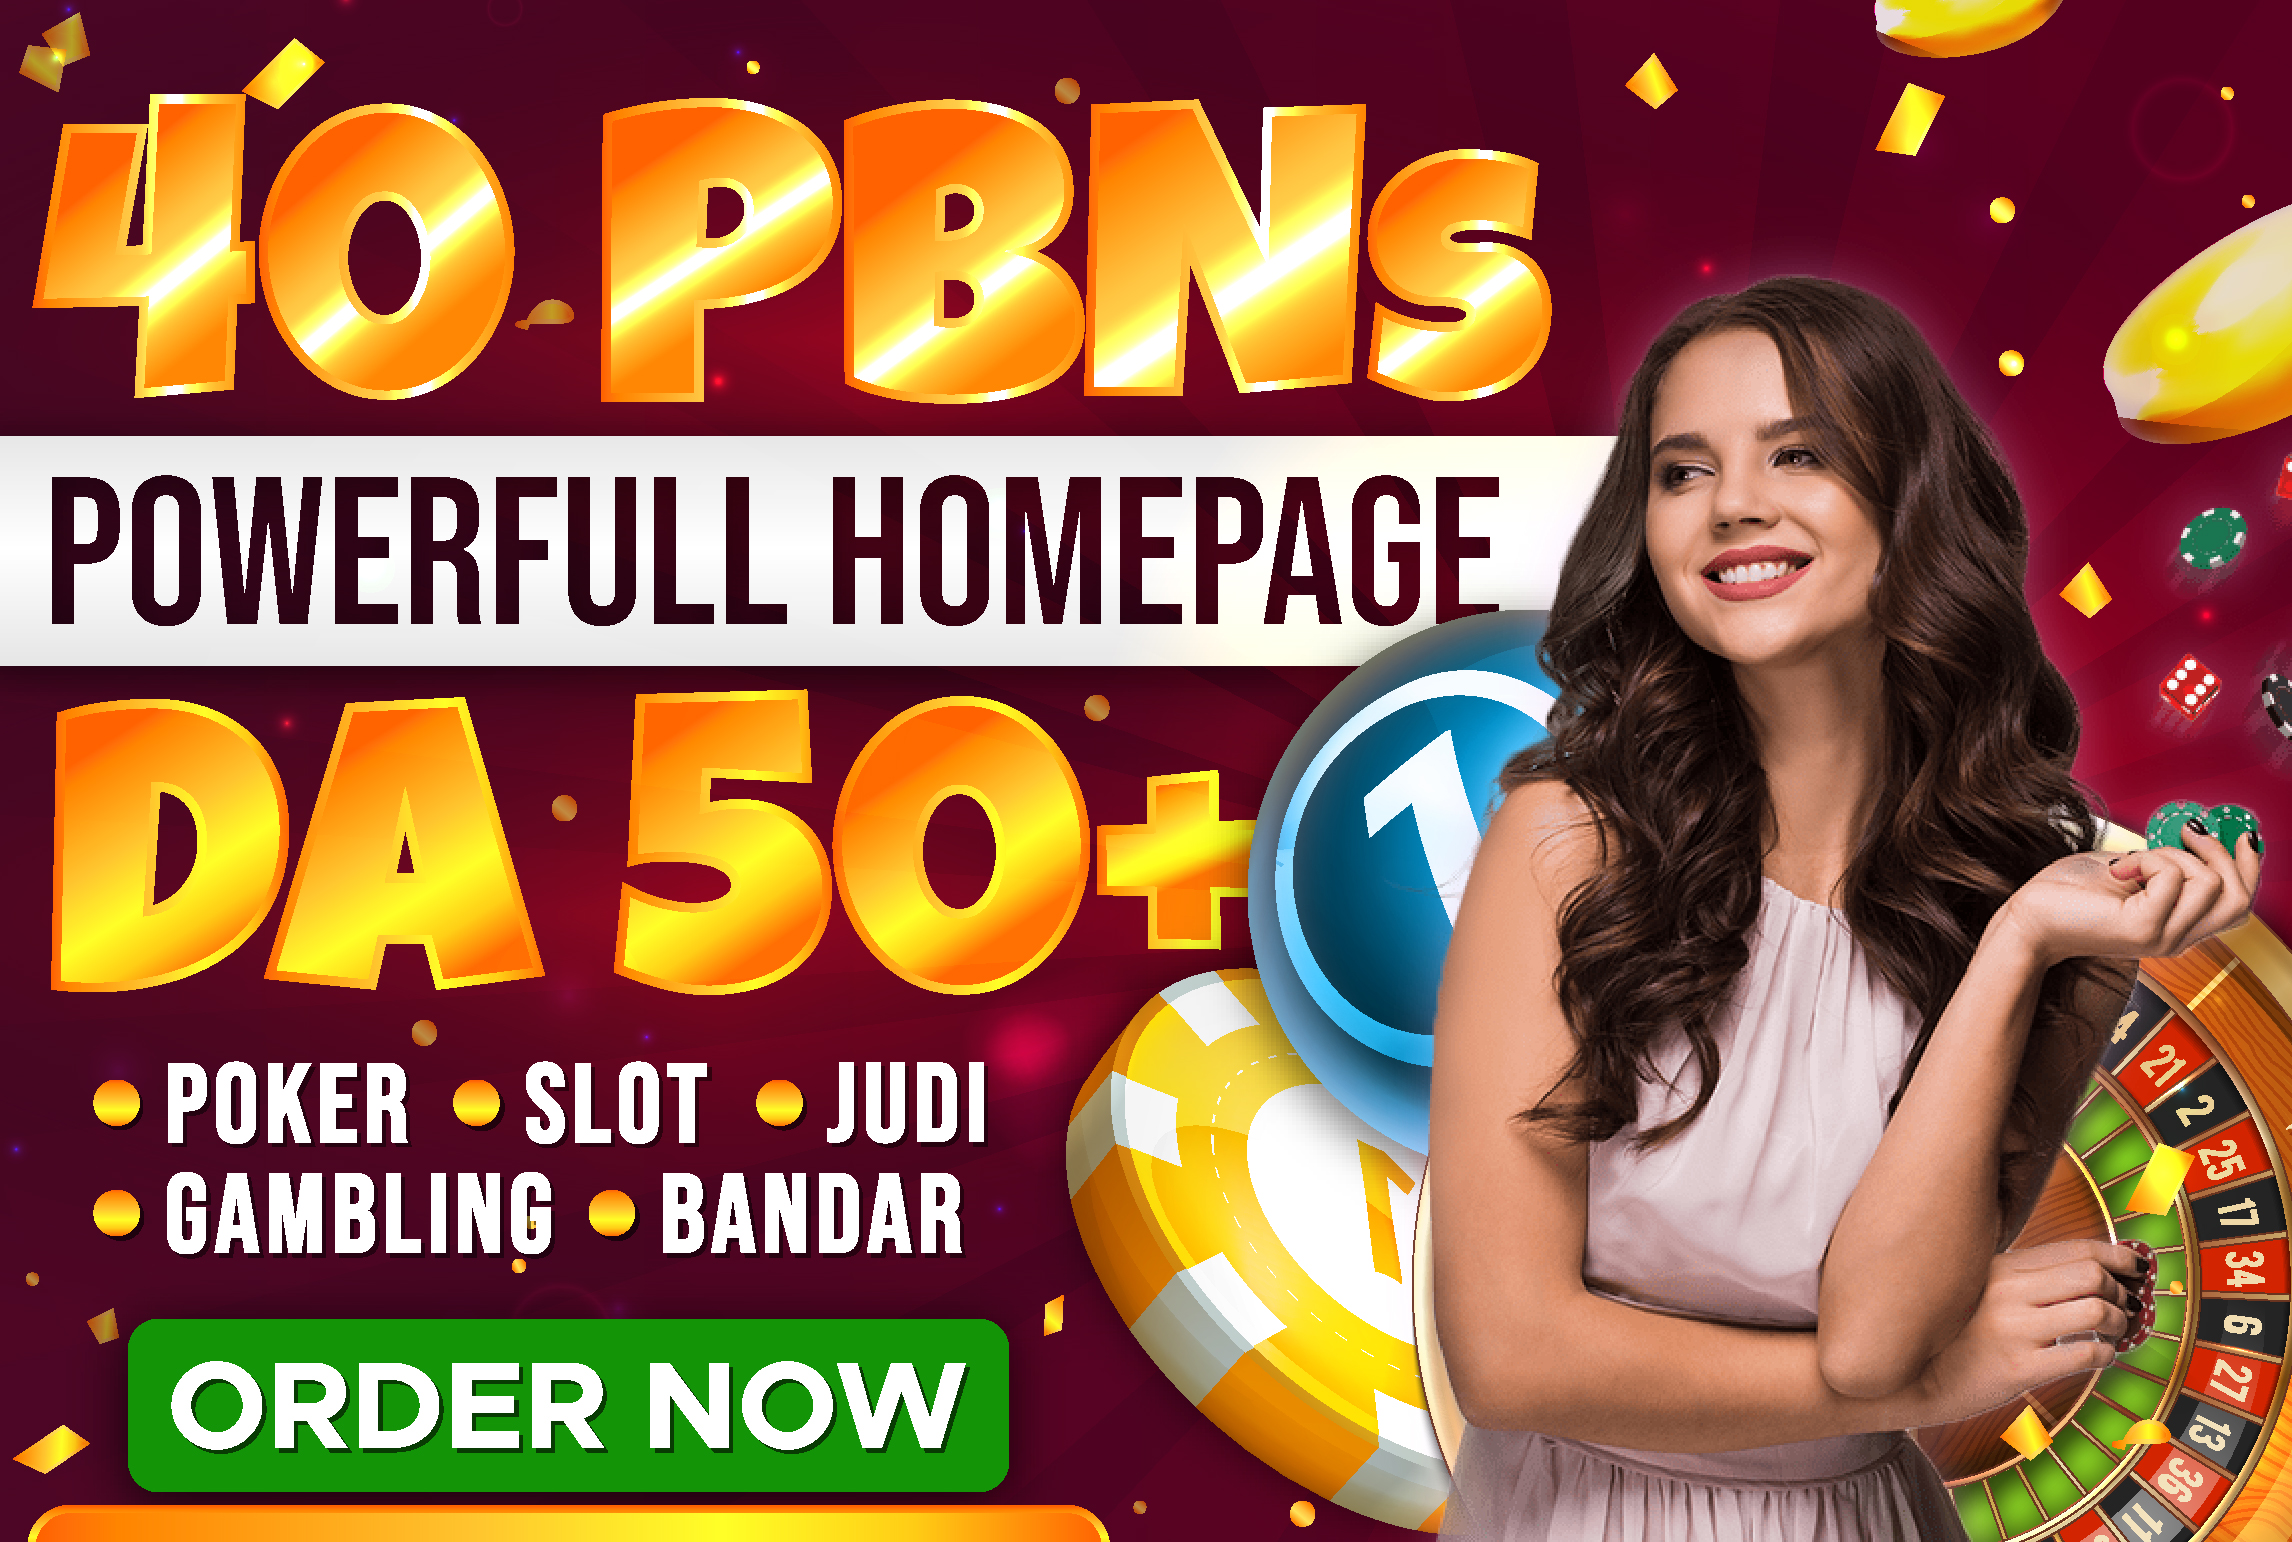 40 Powerful Homepage Dofollow PBN Casino, Poker Backlinks DA 50+